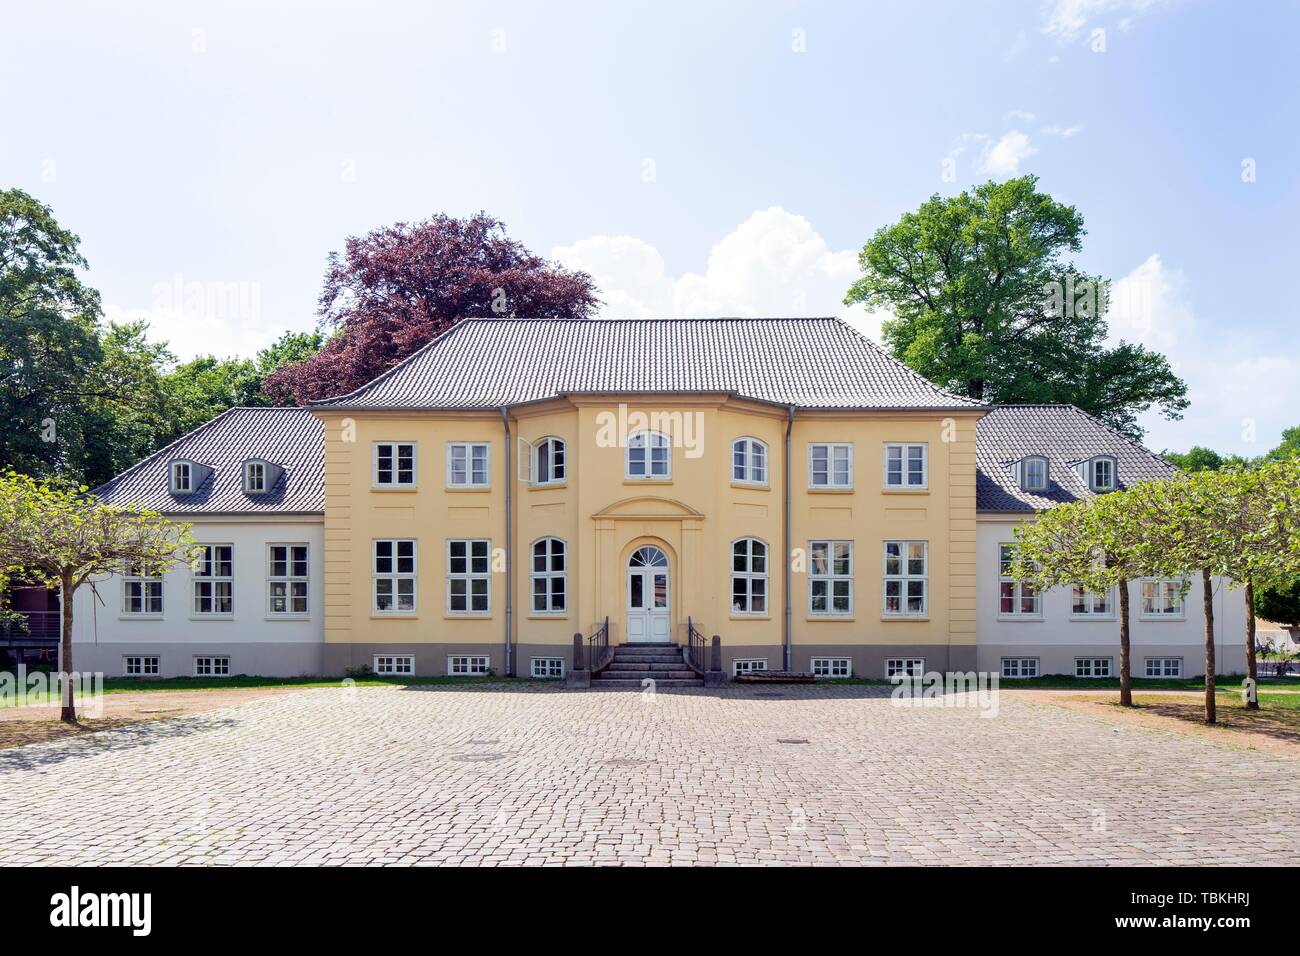 Caspar-von-Saldern-Haus, École de musique et centre culturel, Neumunster, Schleswig-Holstein, Allemagne Banque D'Images